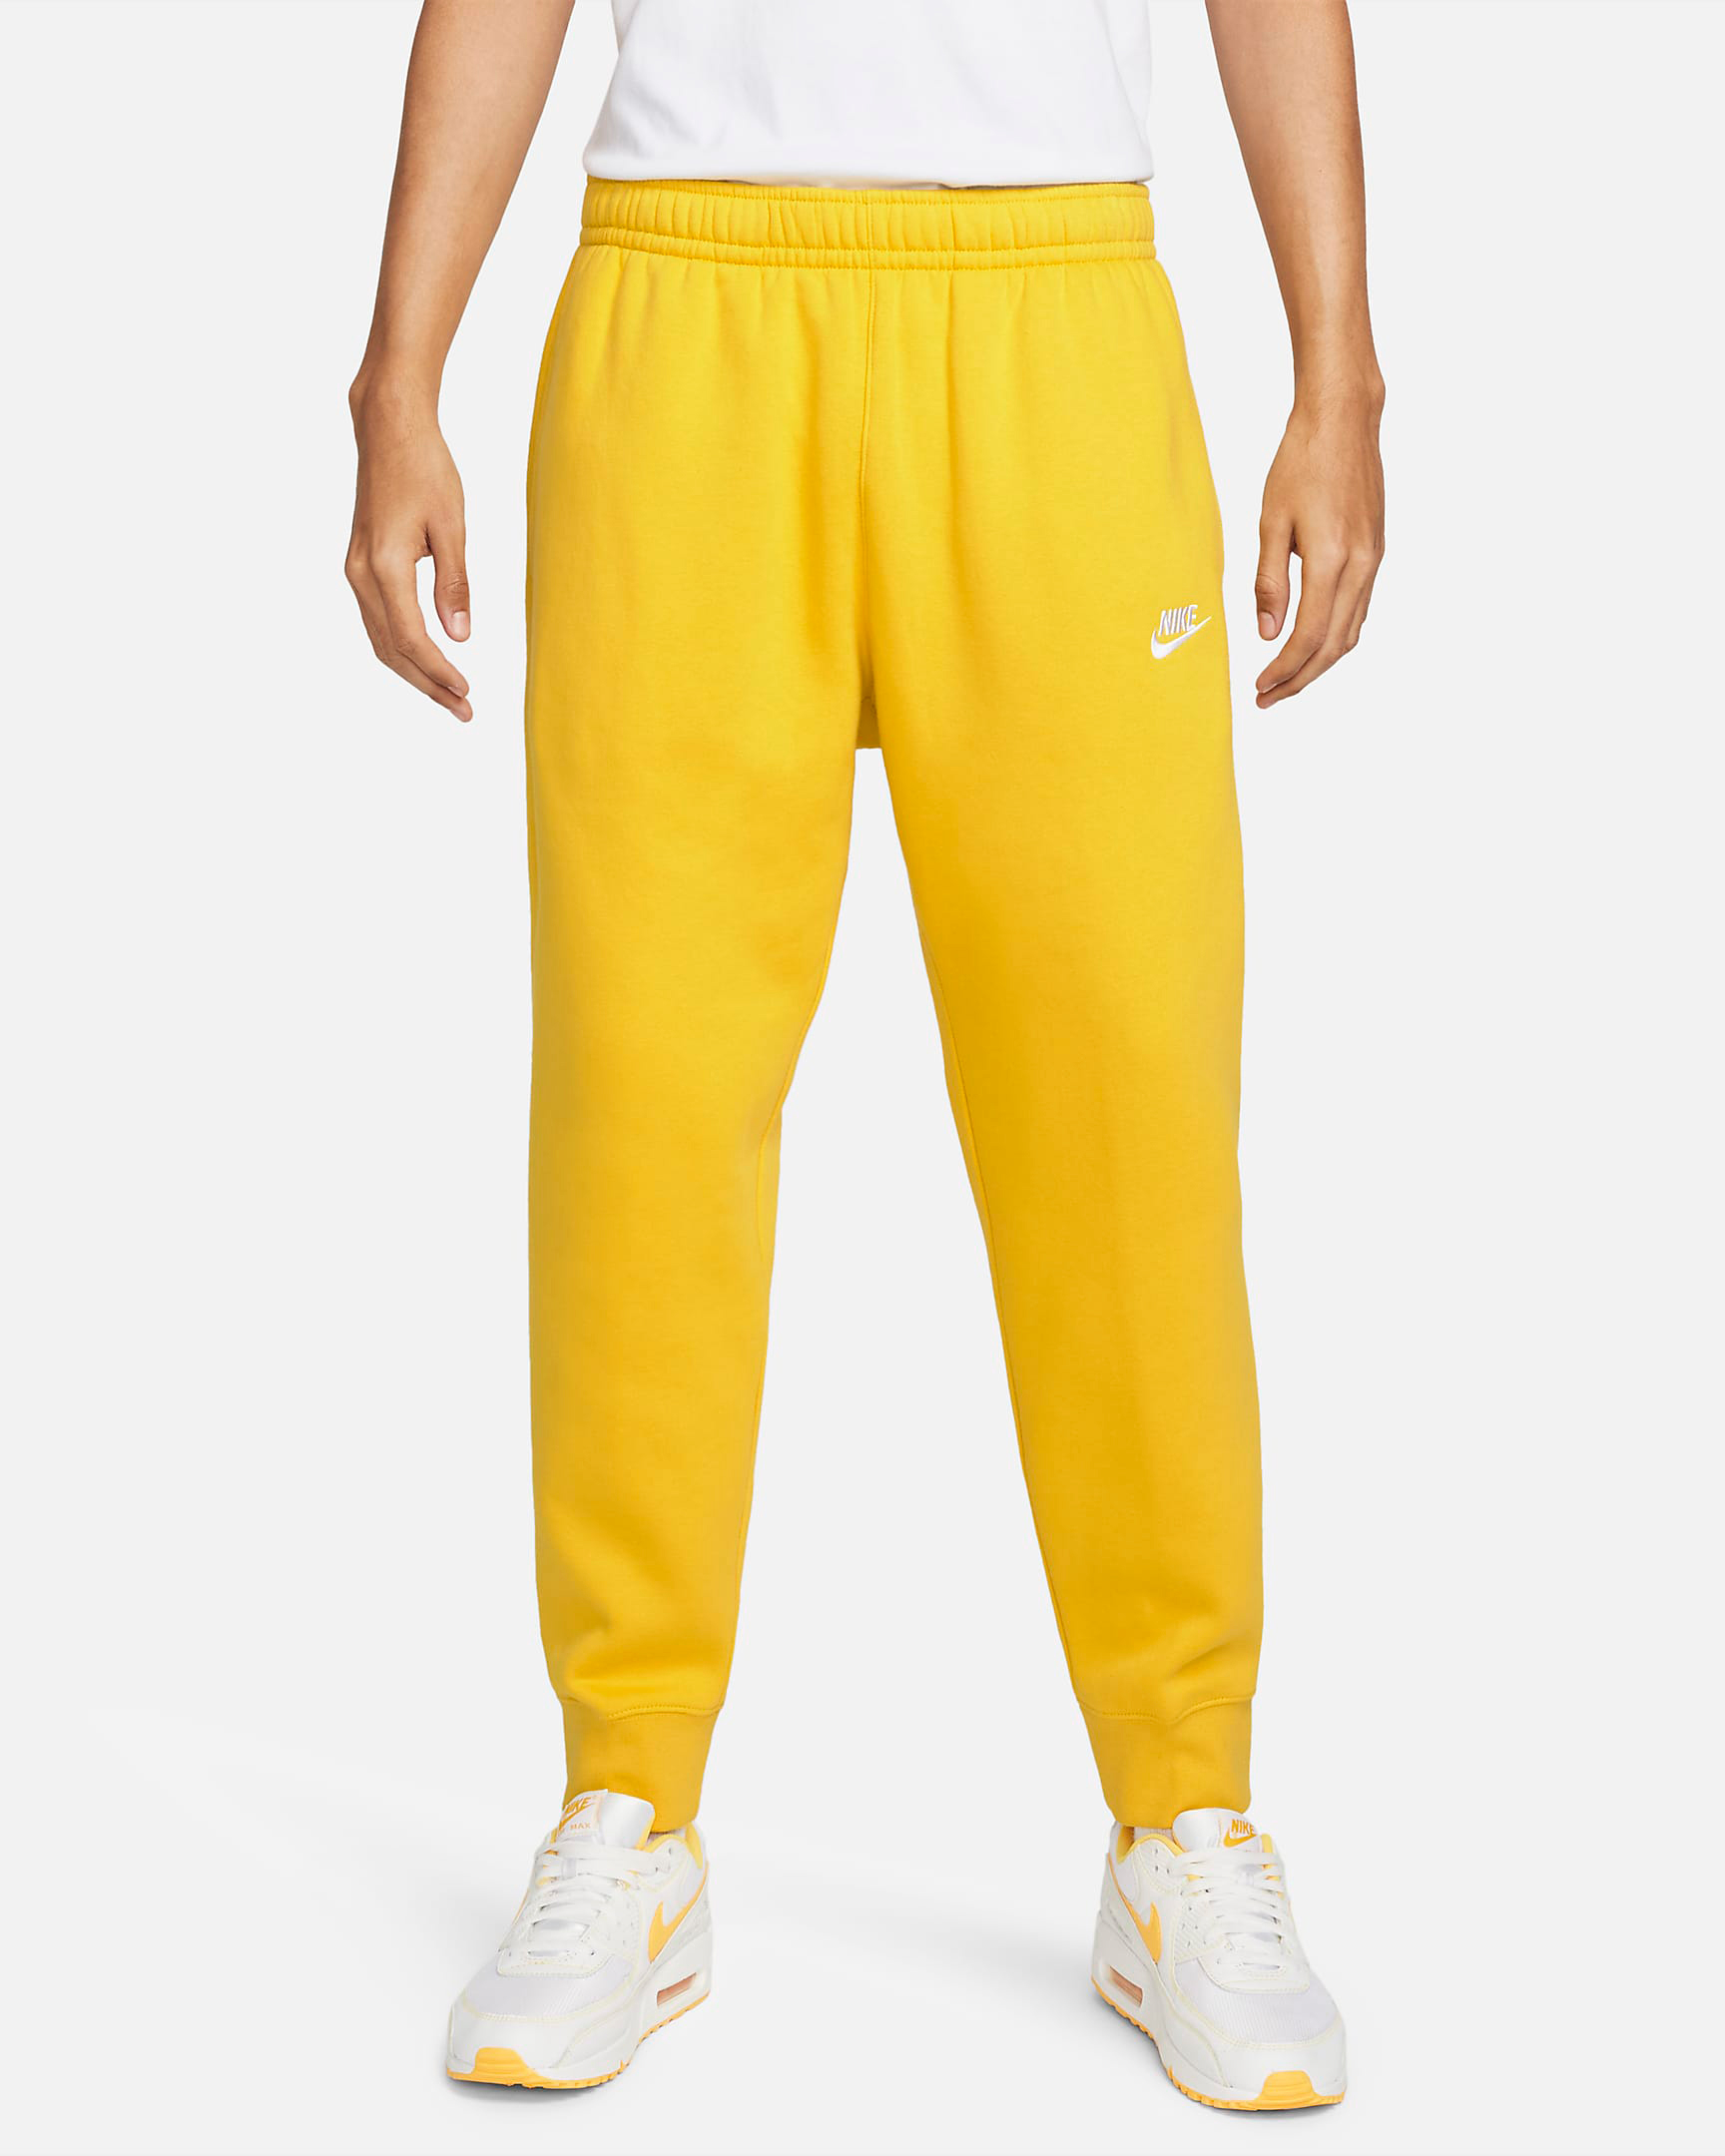 Nike Vivid Sulfur Yellow Sneaker Shirts Clothing Outfits